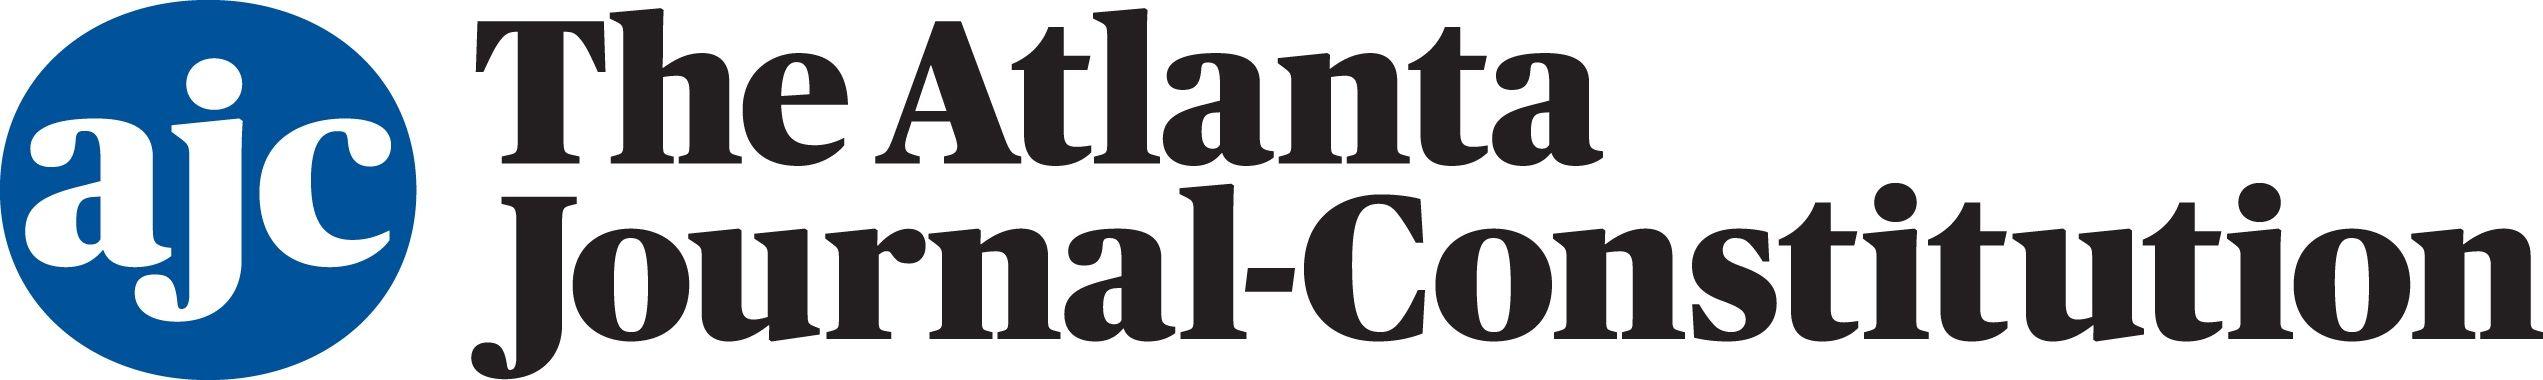 Atlanta Newspaper Logo - Atlanta journal constitution Logos